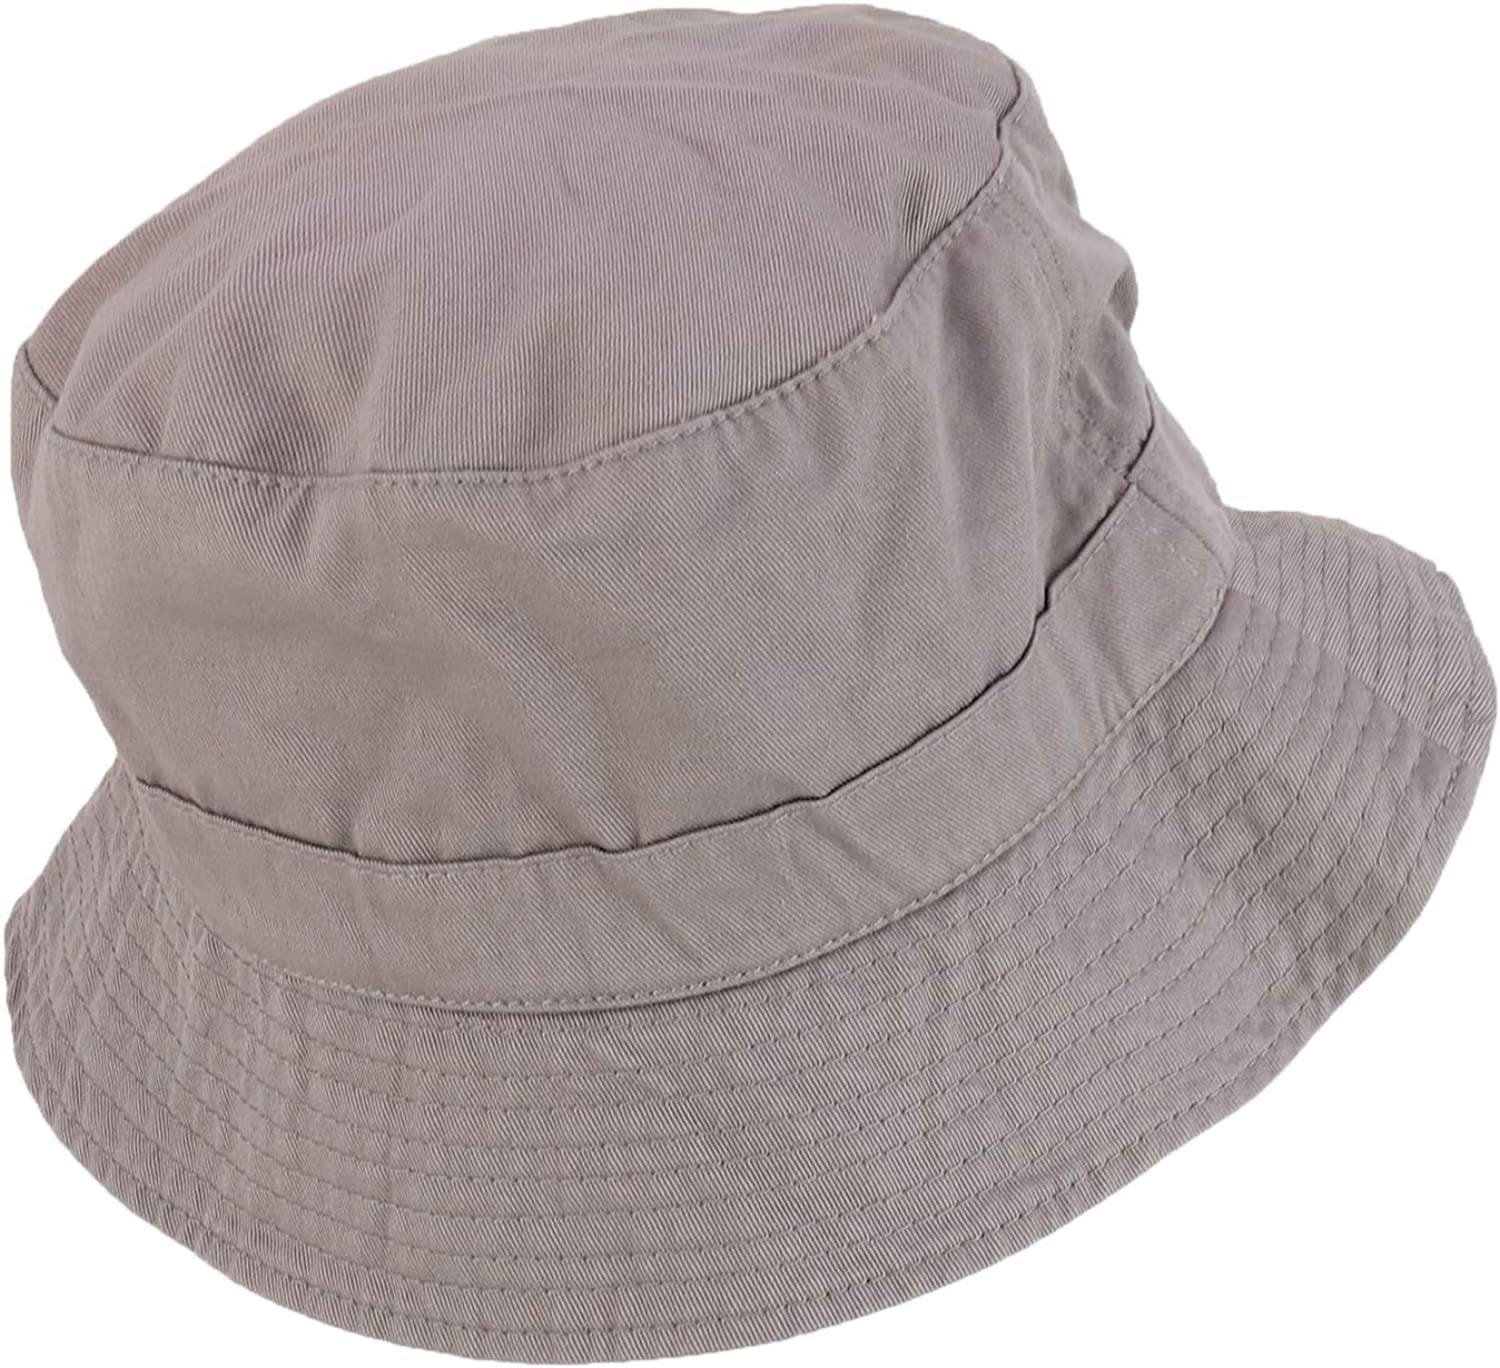 Armycrew Soft Cotton Fisherman Polo Bucket Hat - Grey - S-M